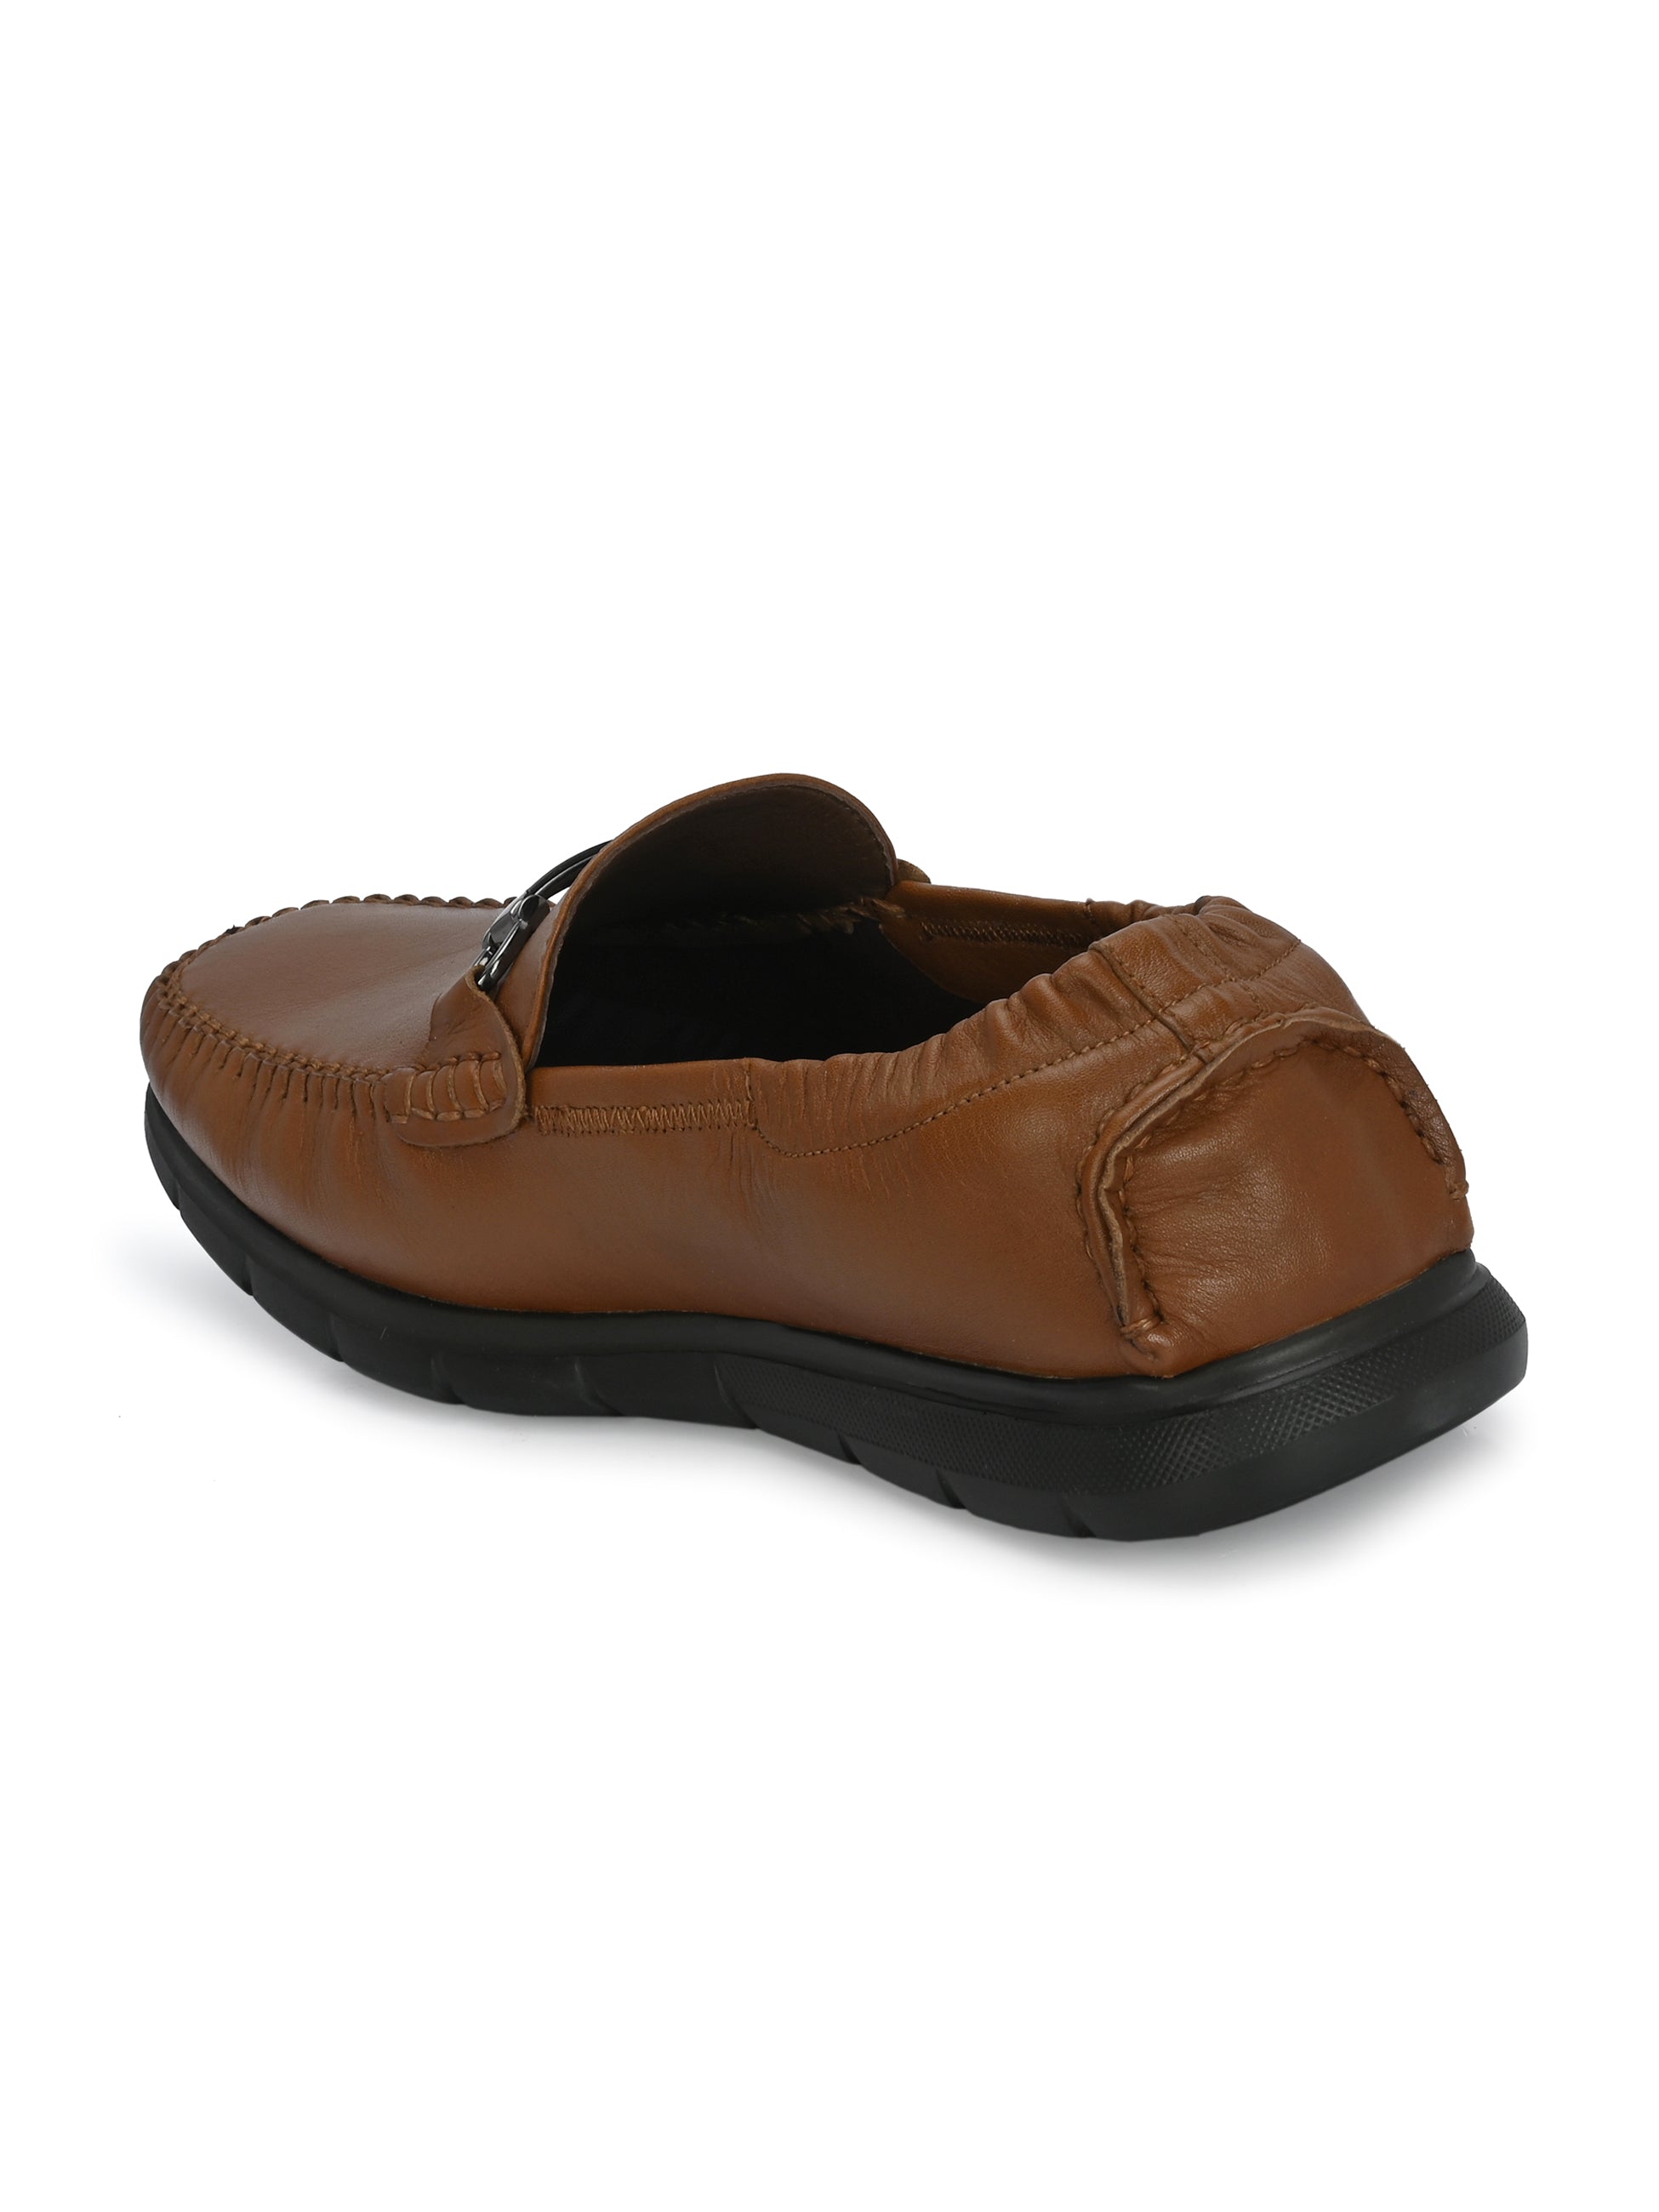 Zero Gravity Premium Loafers For Men